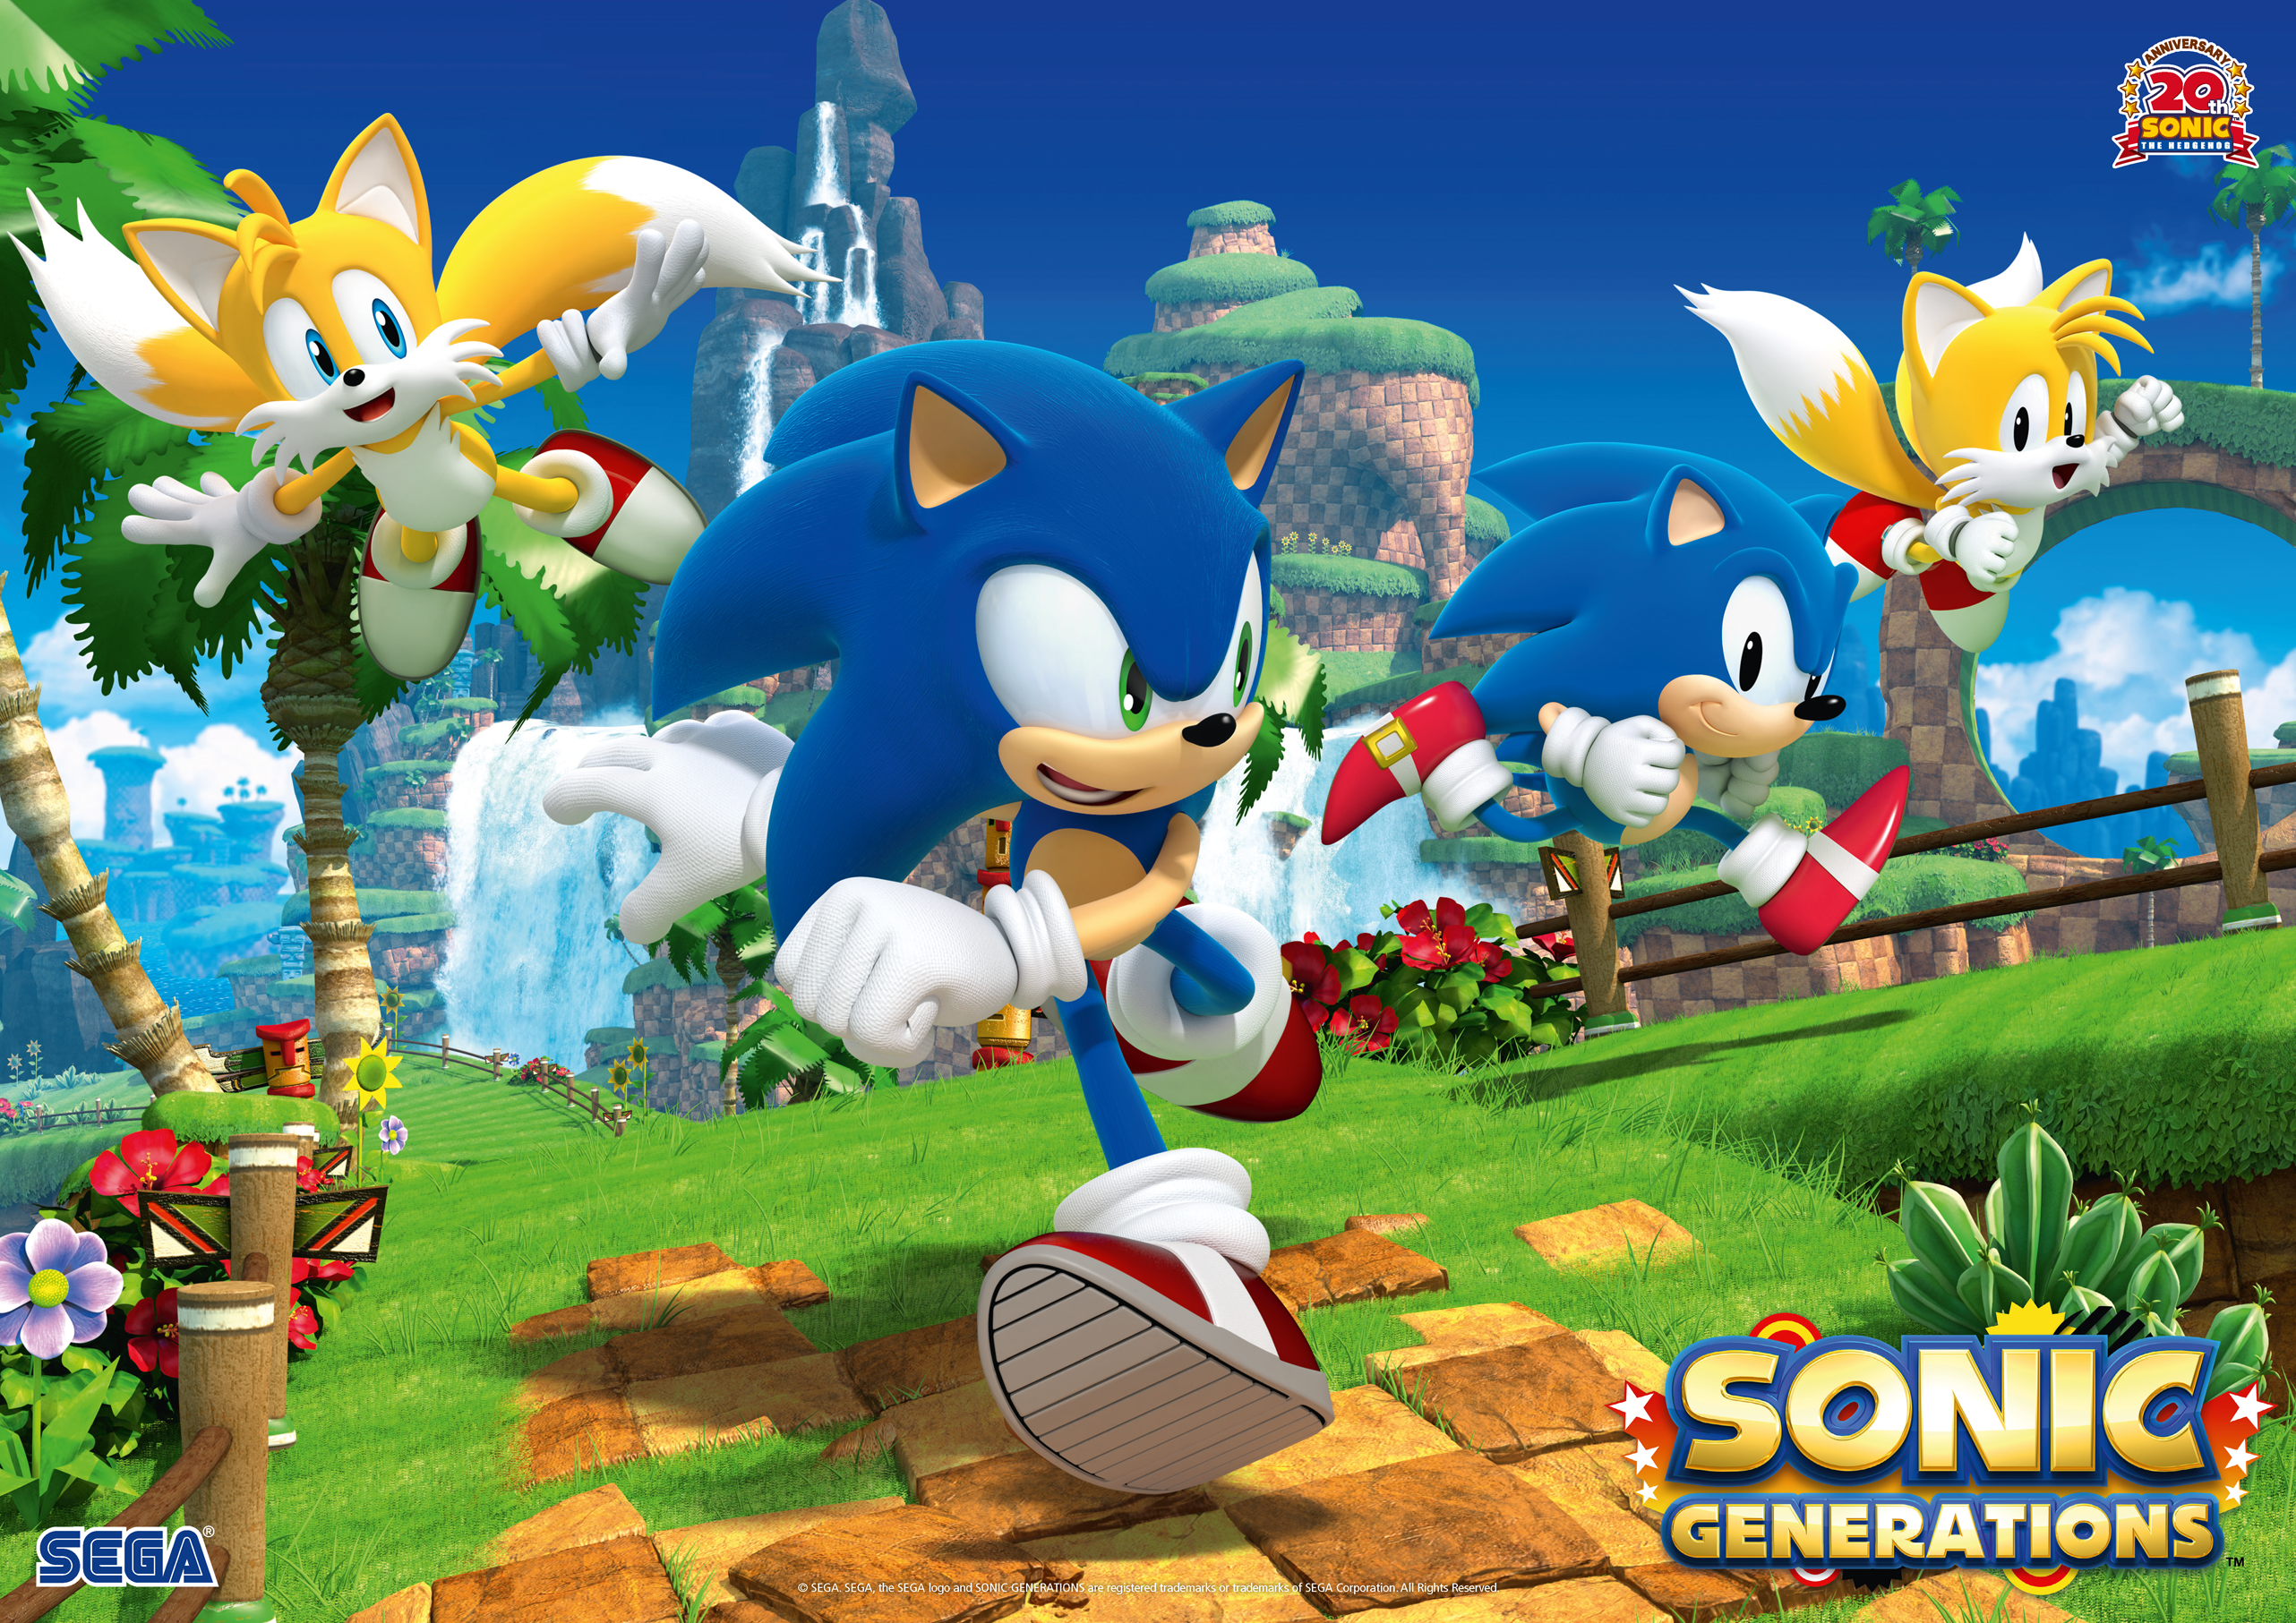 Sonic generations wallpaper